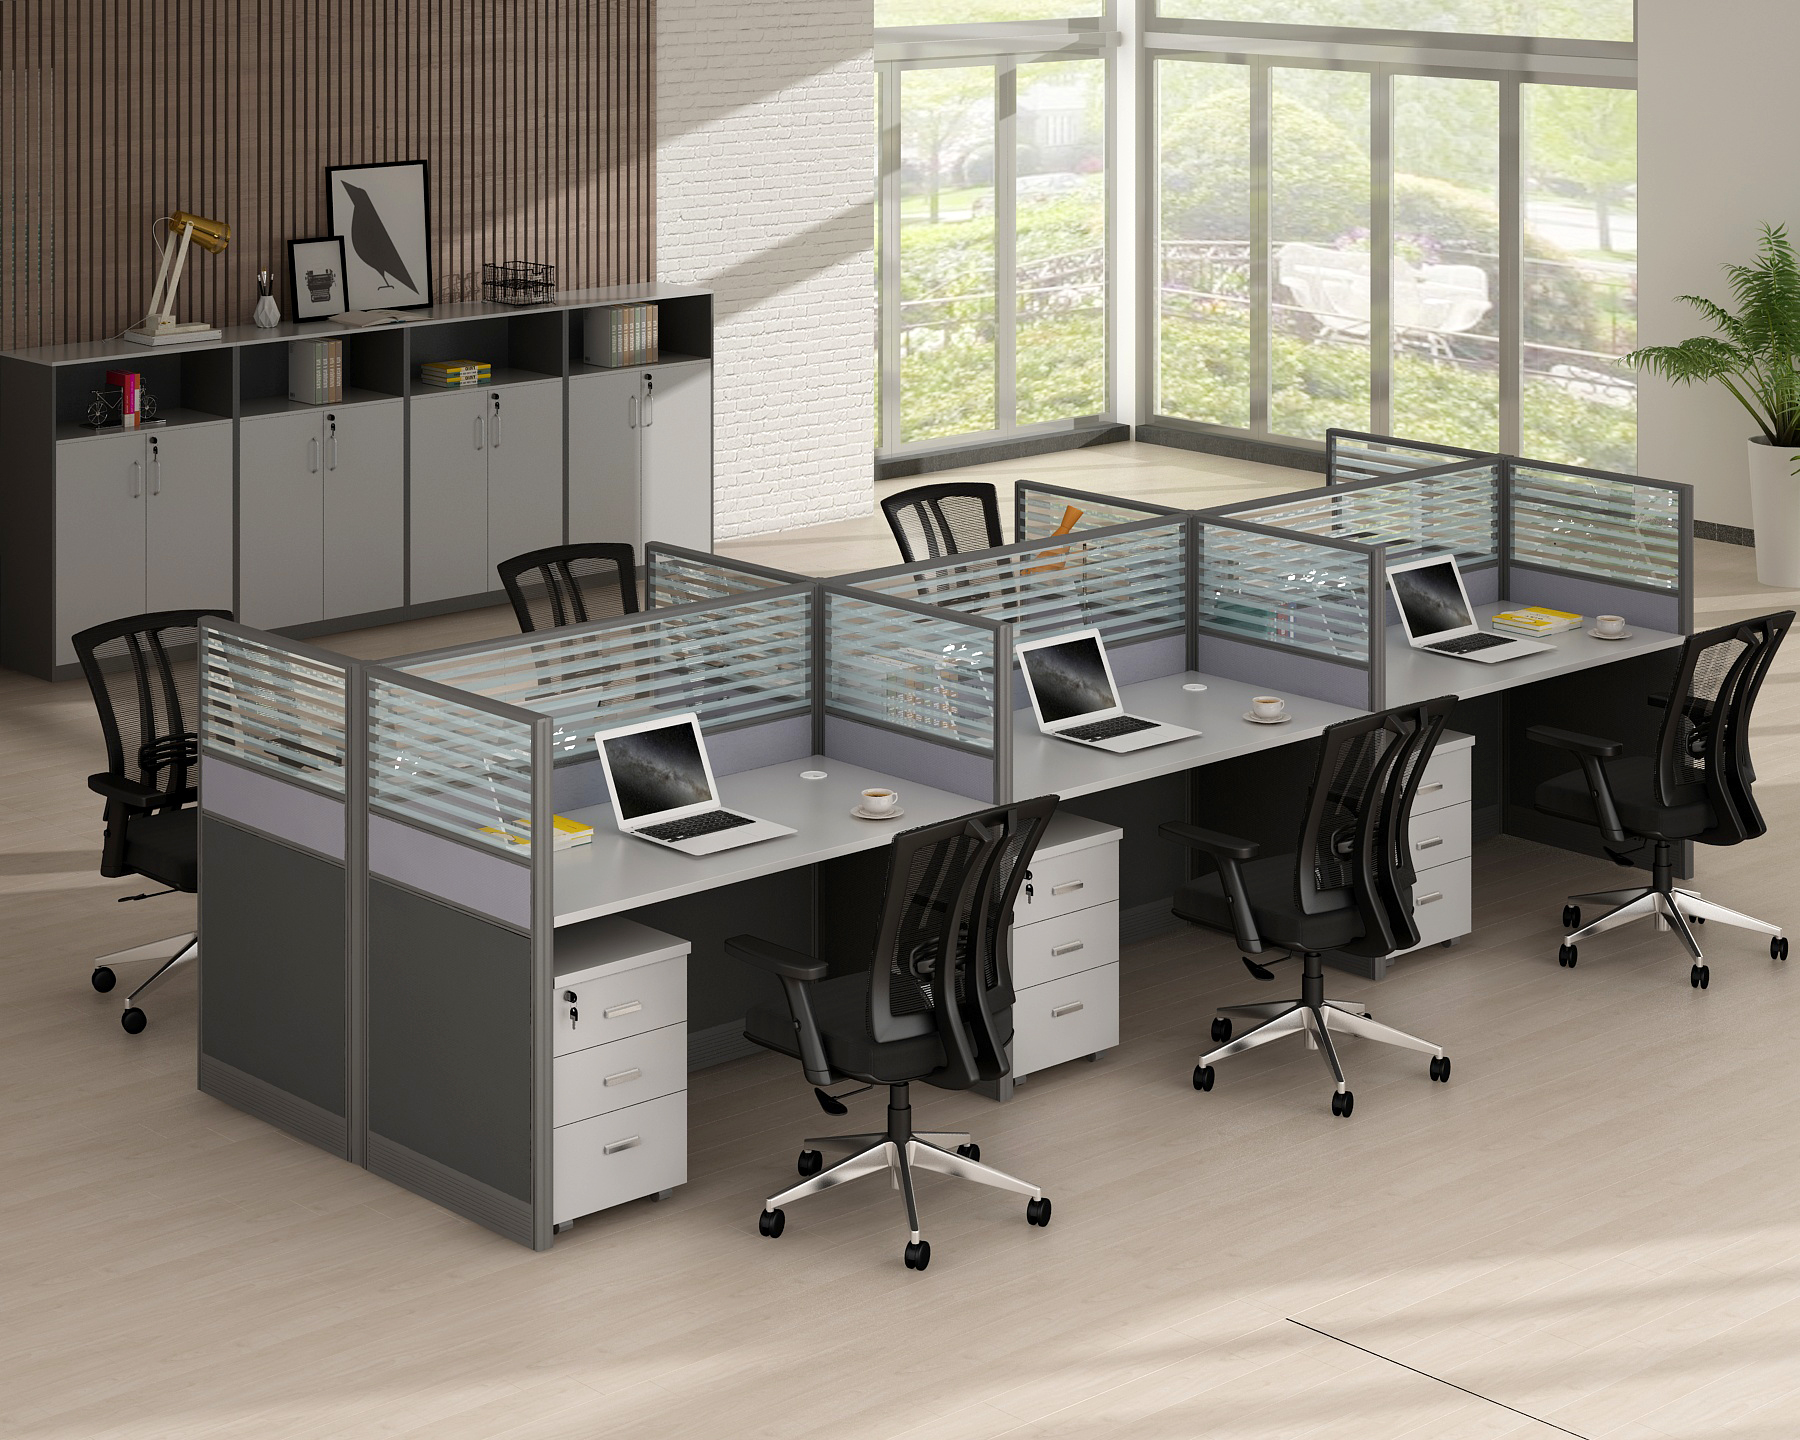 Factory customized system office furniture melamine sheet workstation desk modern design style